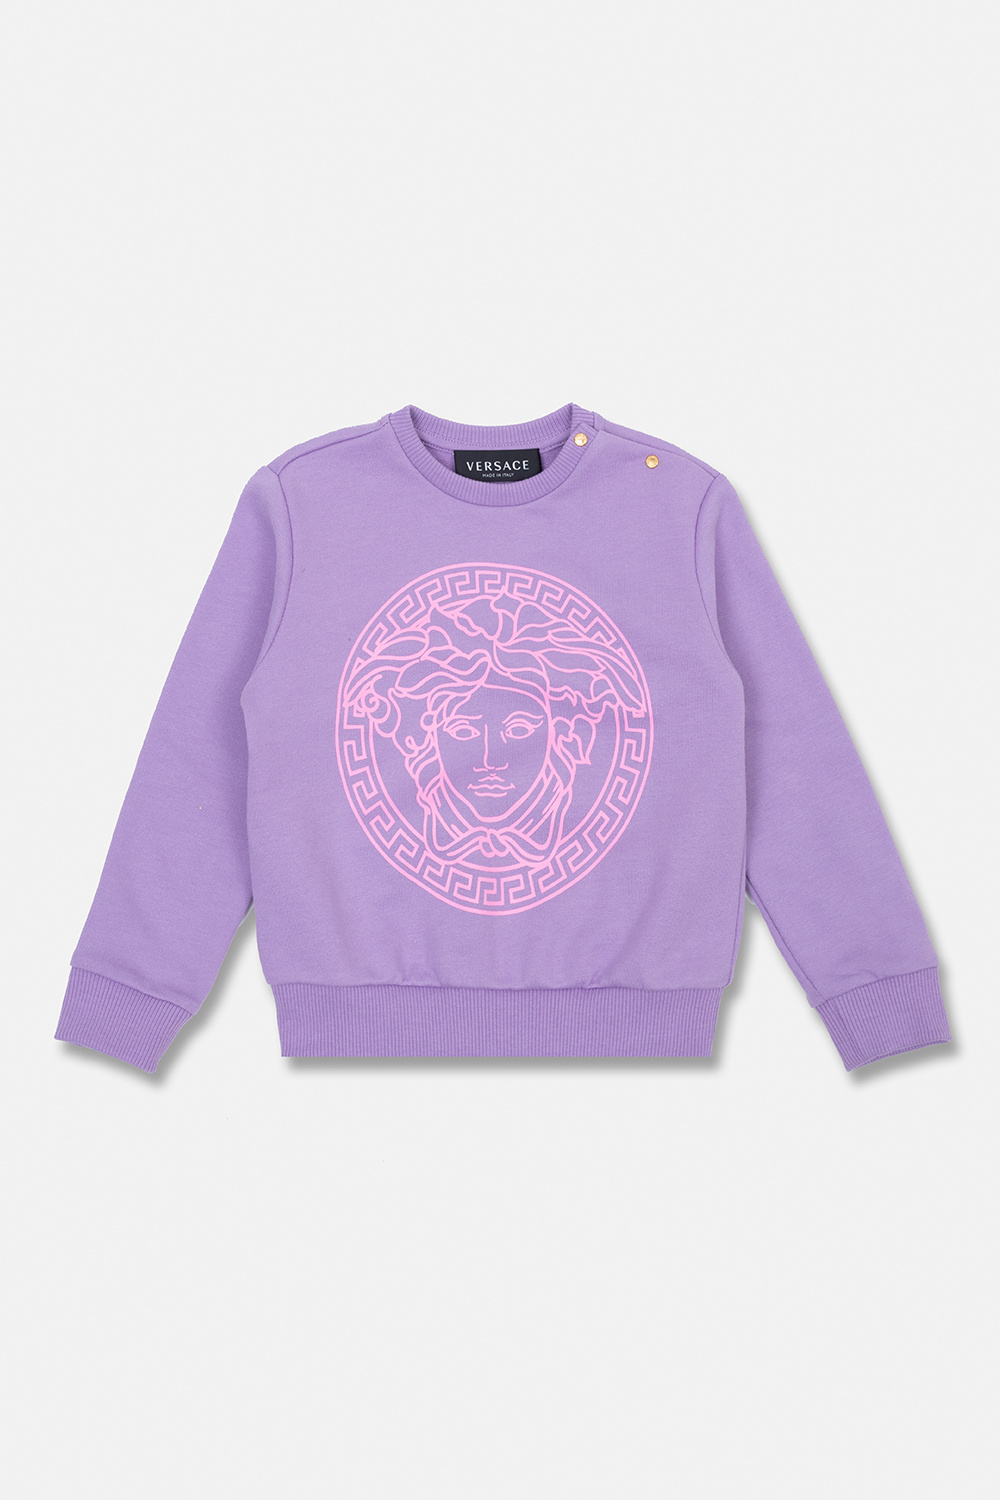 Versace Kids sweatshirt KK001 with Medusa head